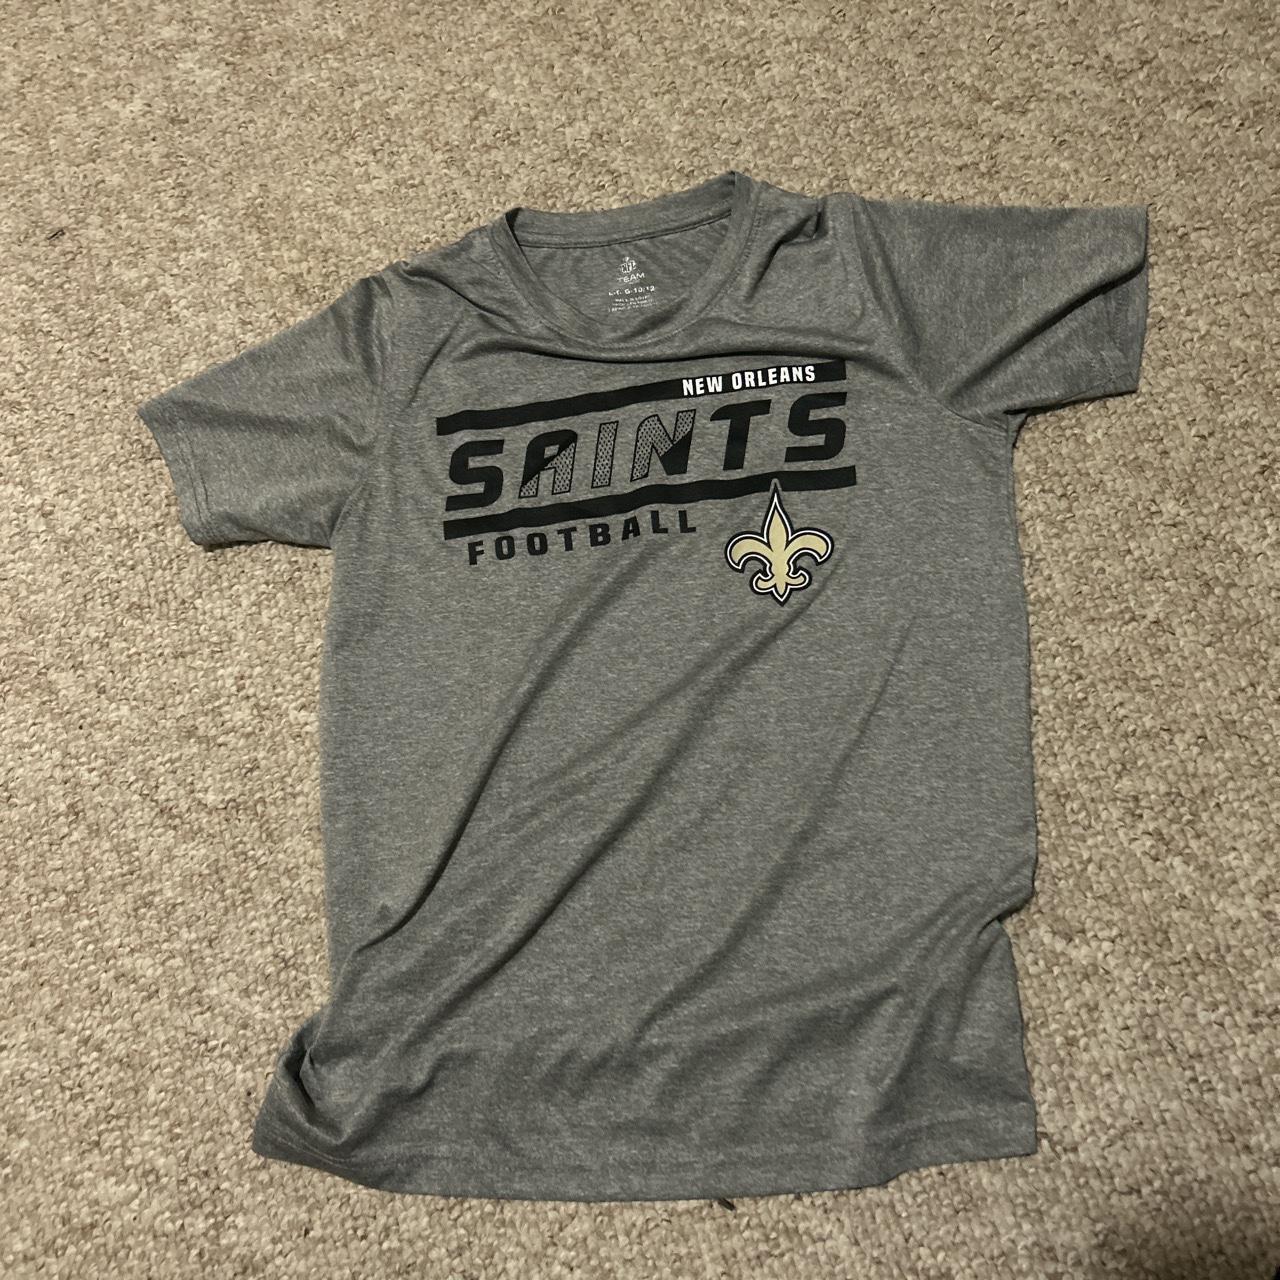 NFL Kids' T-Shirt - Grey